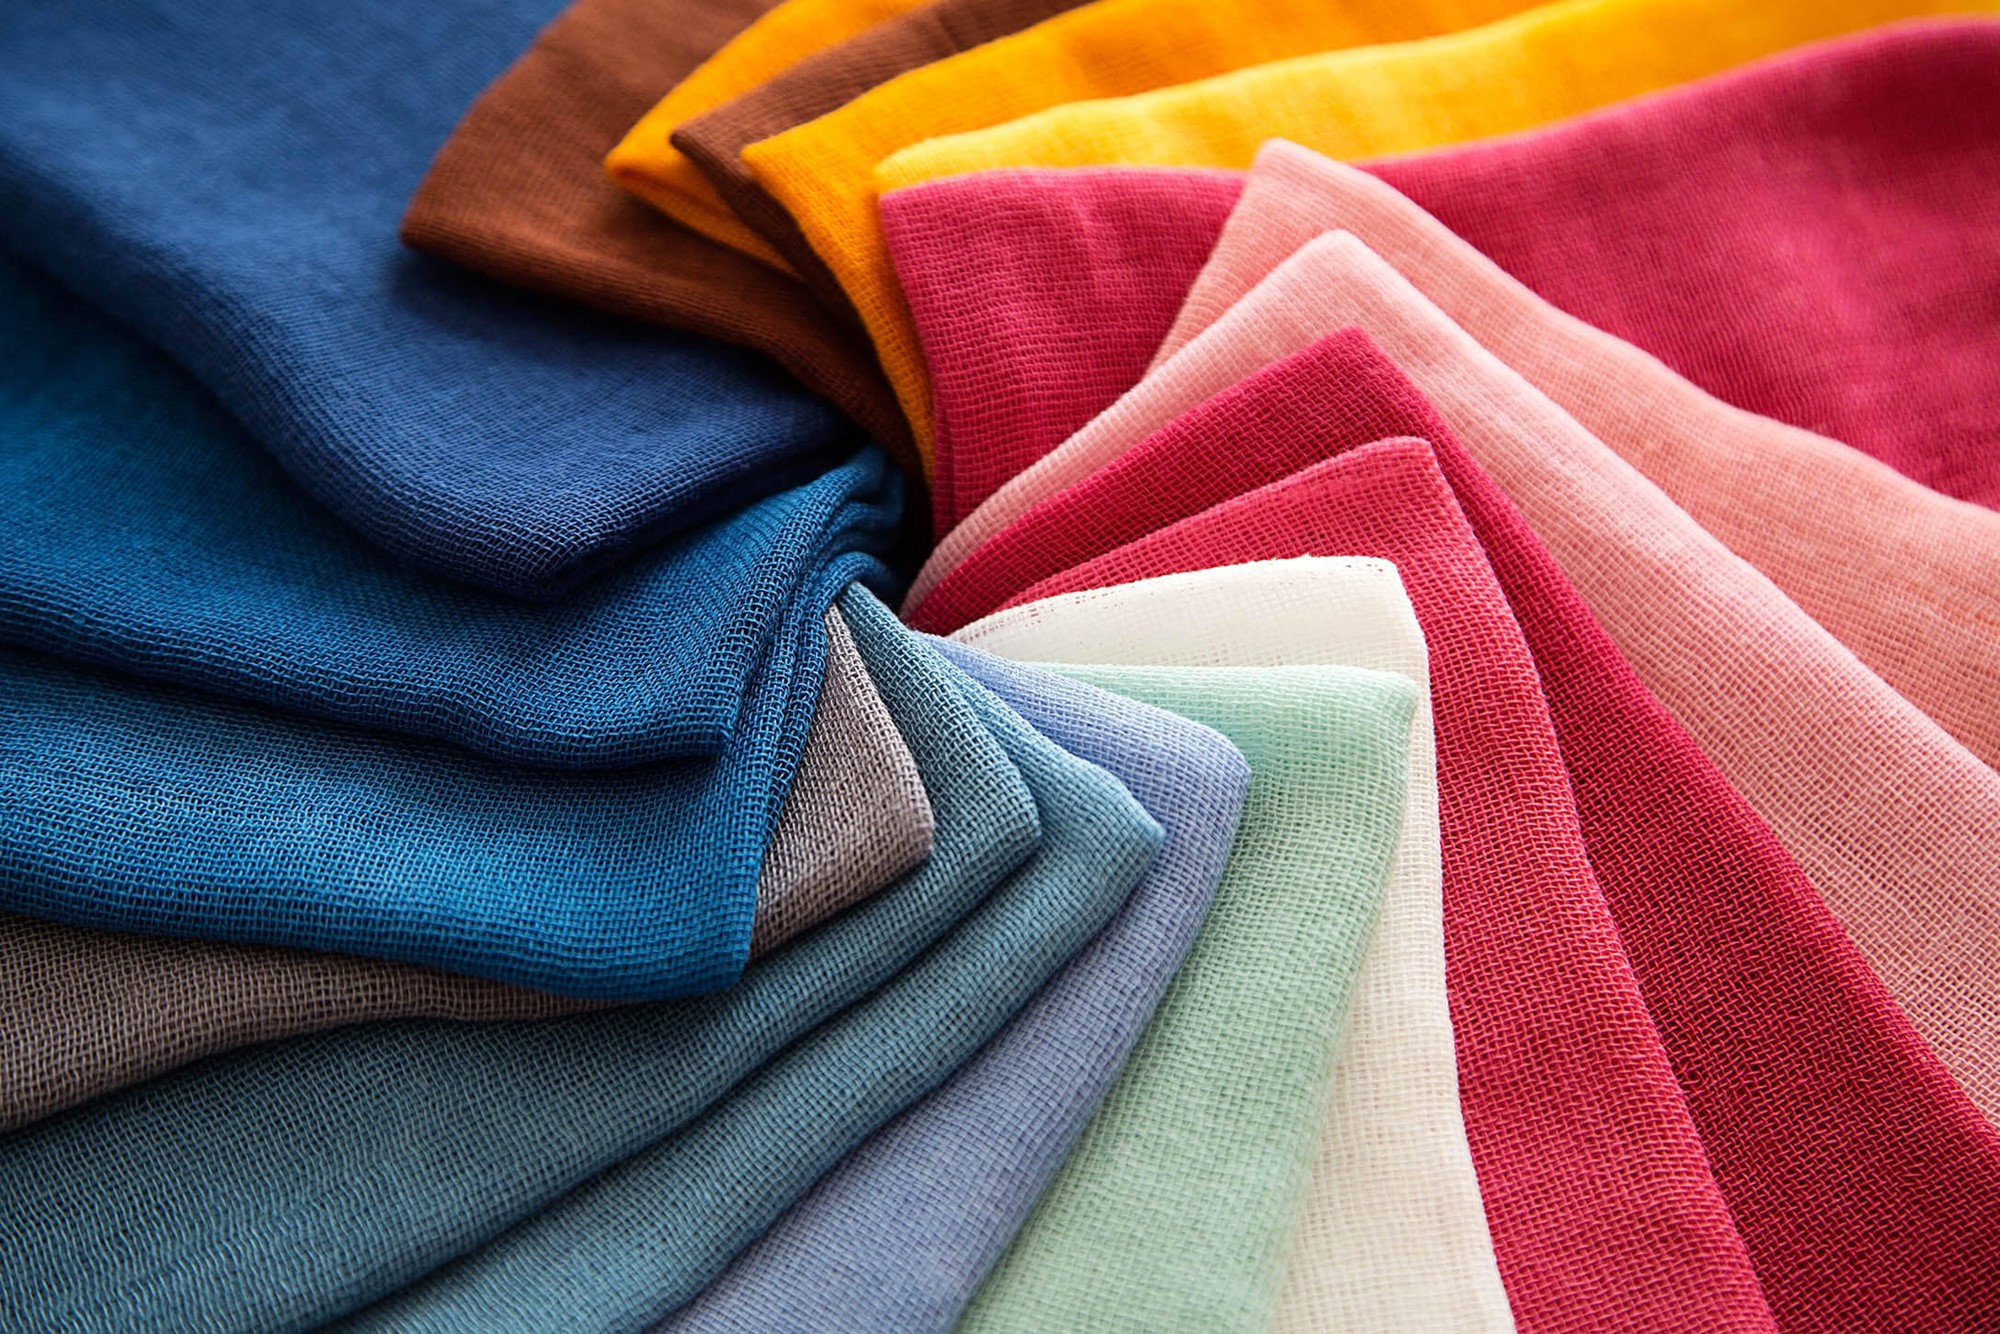 Multi coloured textiles and fabrics